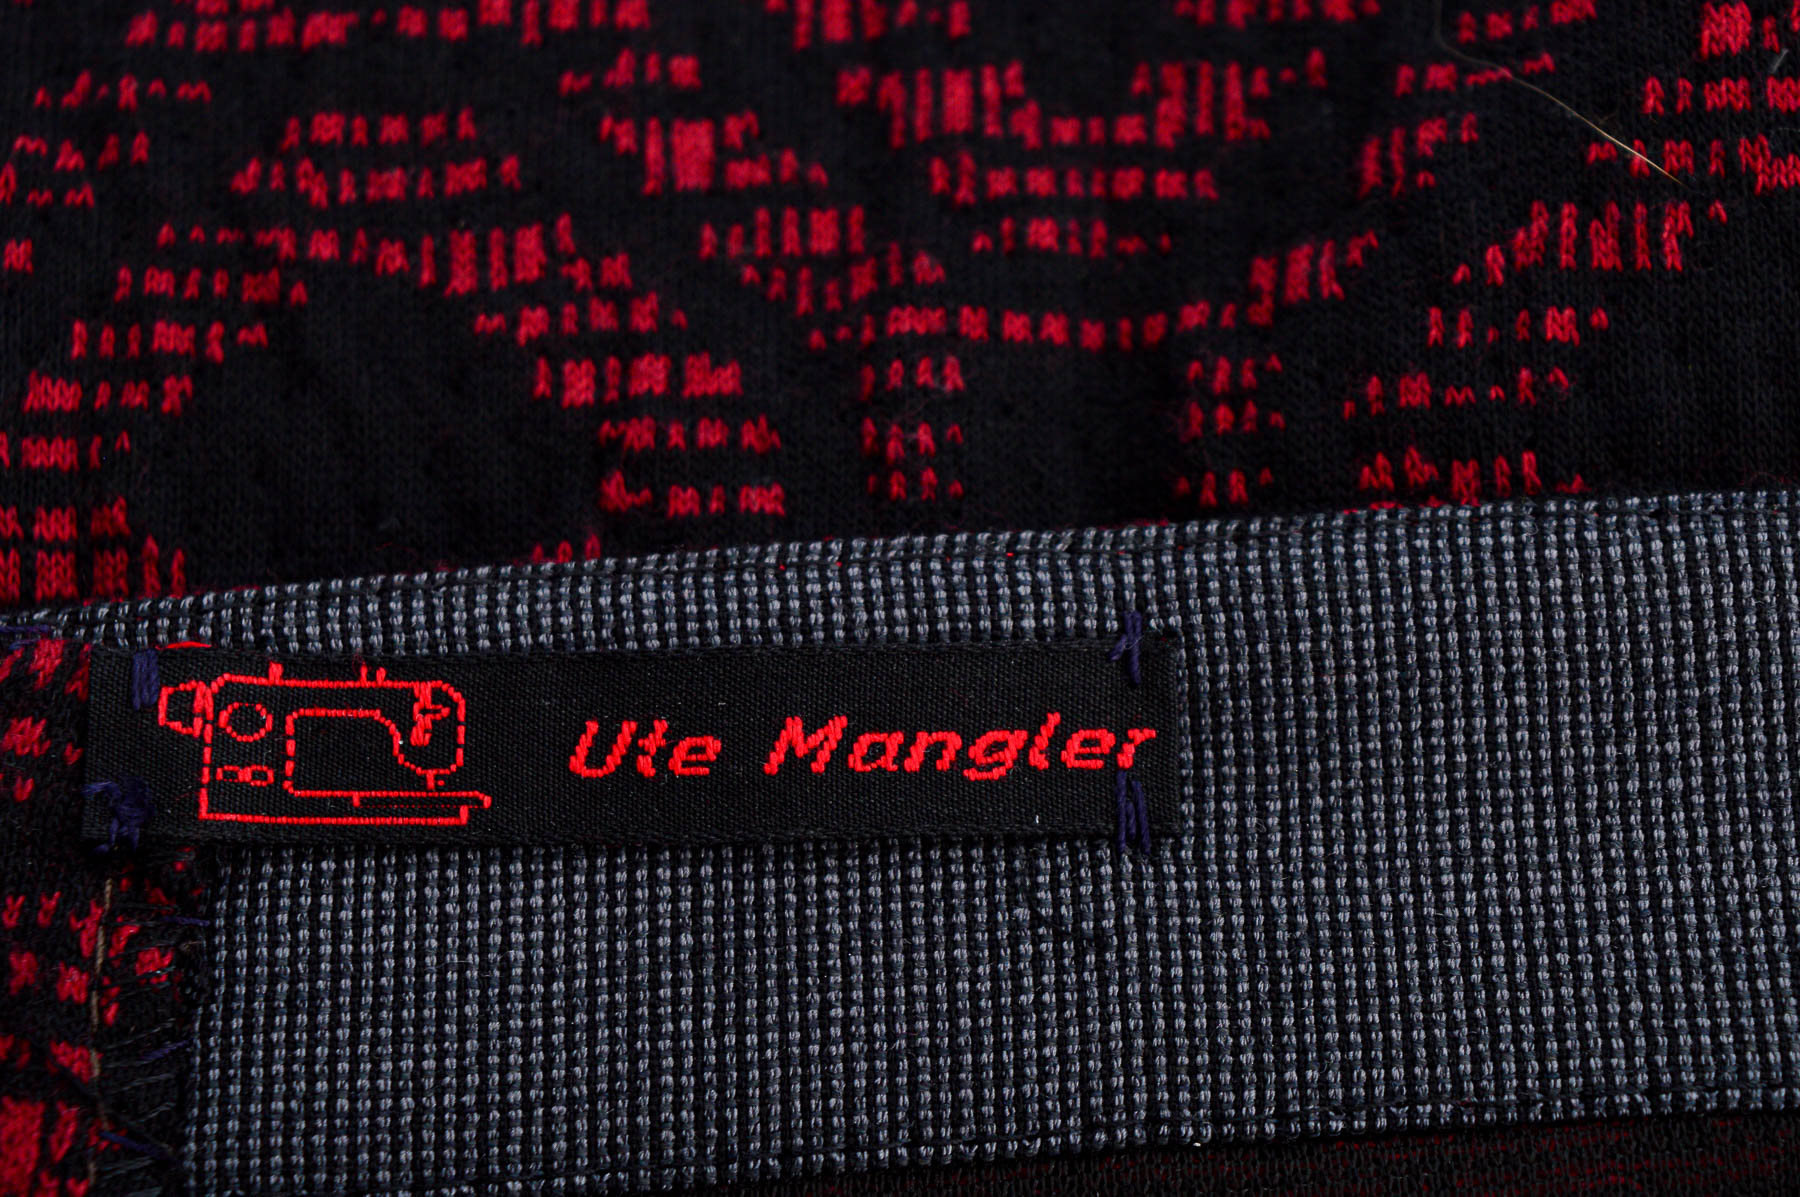 Fustă - Ute Mangler - 2